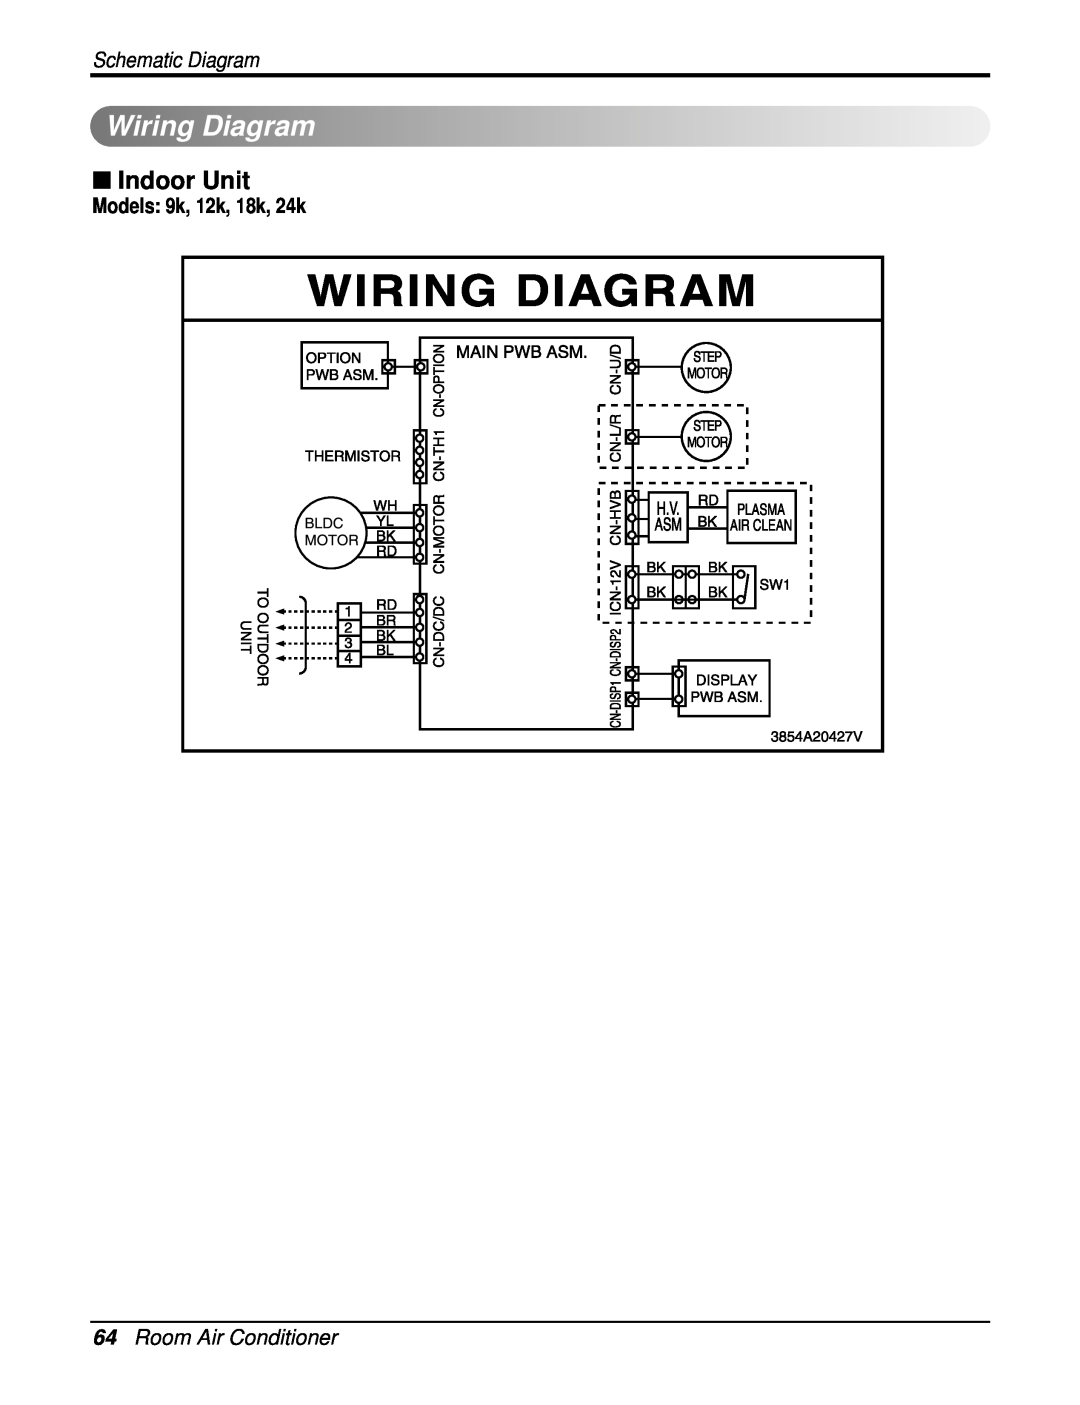 Heat Controller DMC18SB-1 Wiring Diagram, Indoor Unit, 64Room Air Conditioner, Schematic Diagram, Models 9k, 12k, 18k, 24k 